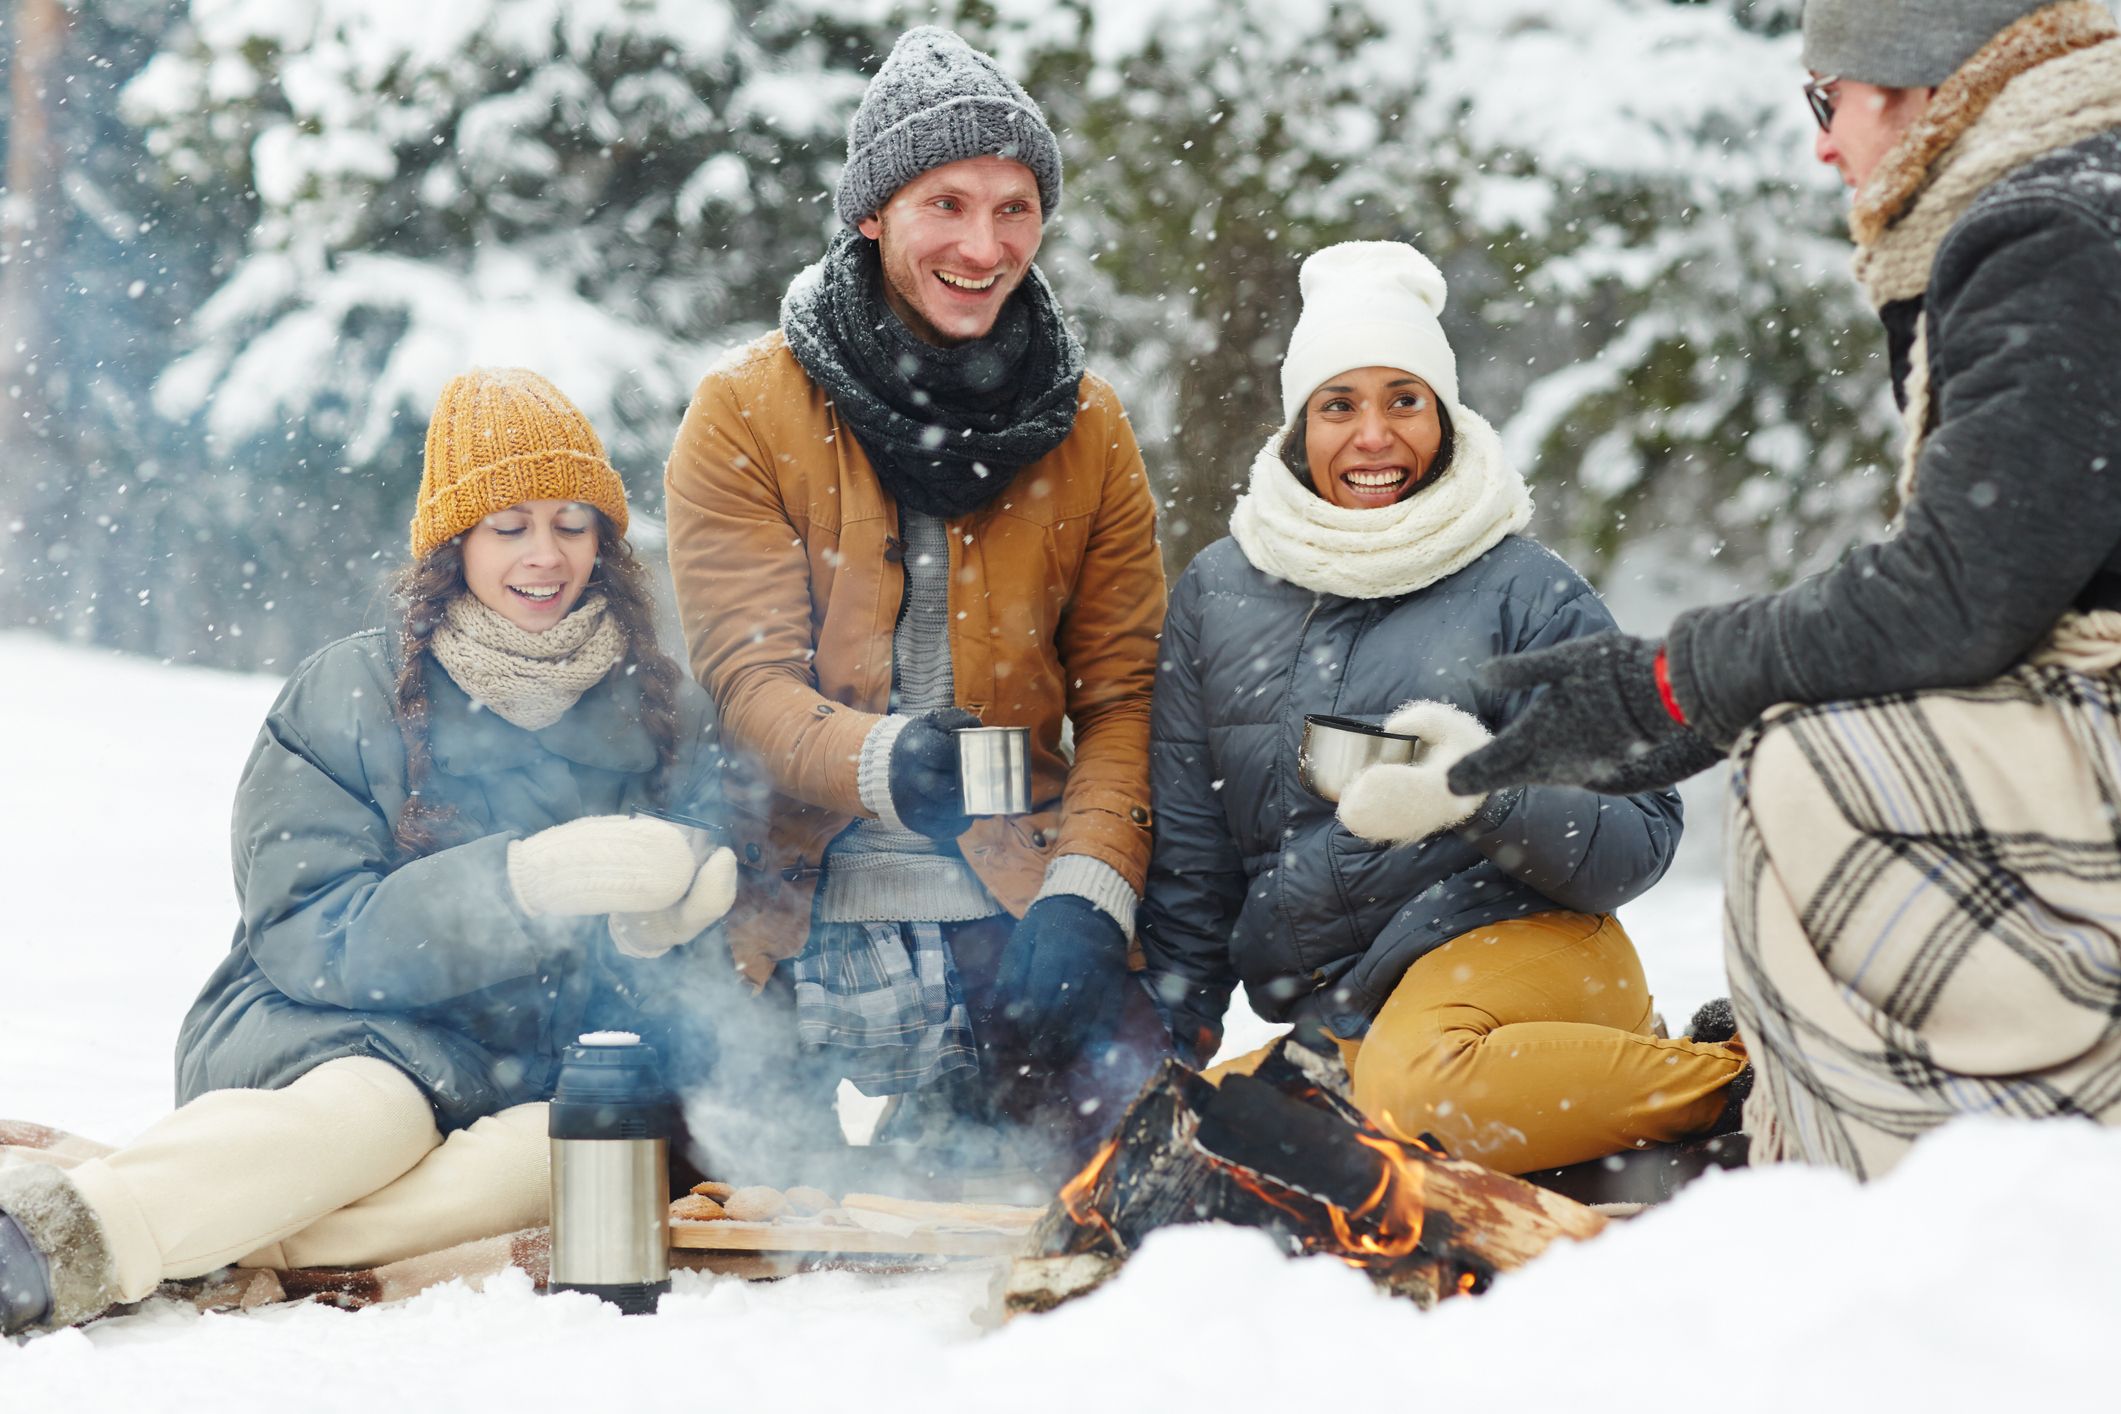 35 Best Things to Do In Winter 2020 - Fun Winter Activities